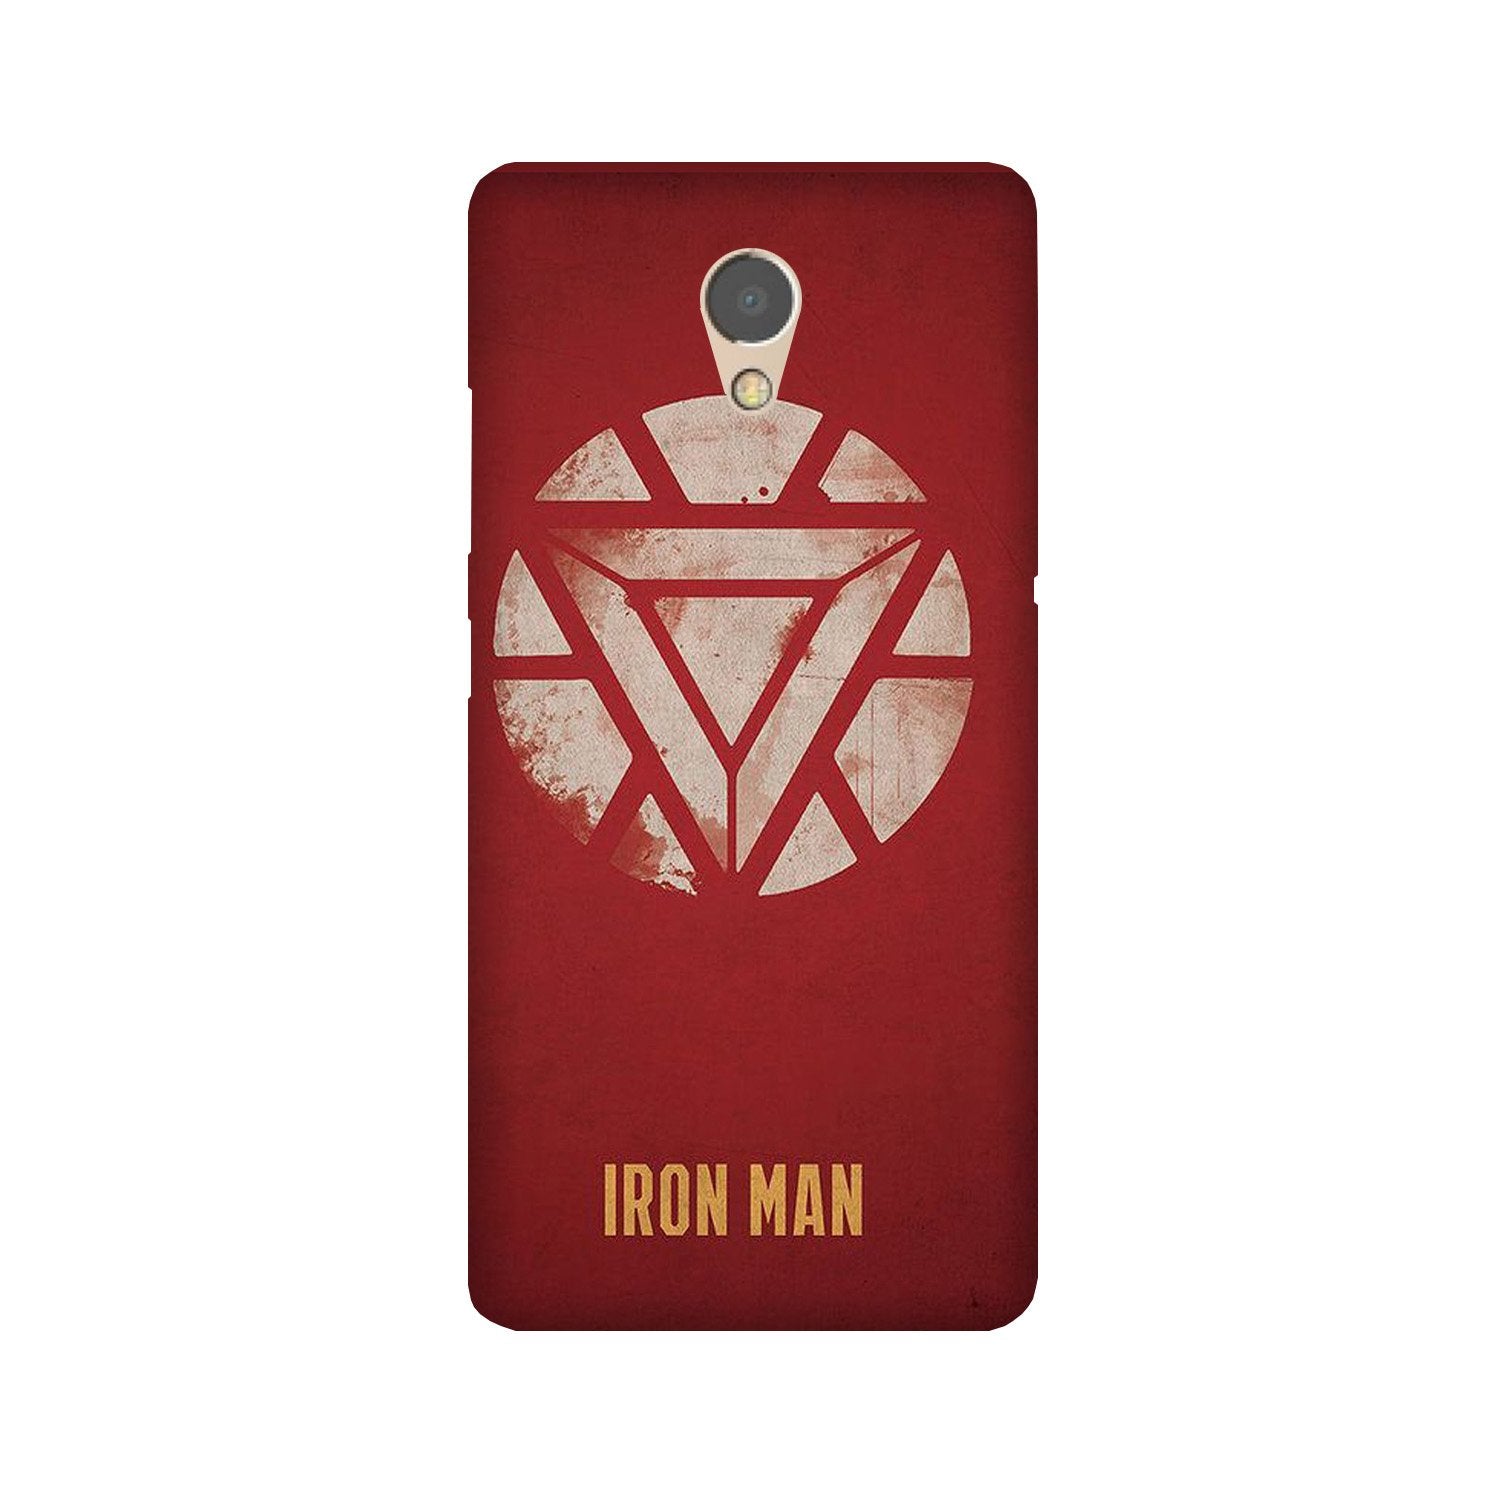 Iron Man Superhero Case for Lenovo P2(Design - 115)